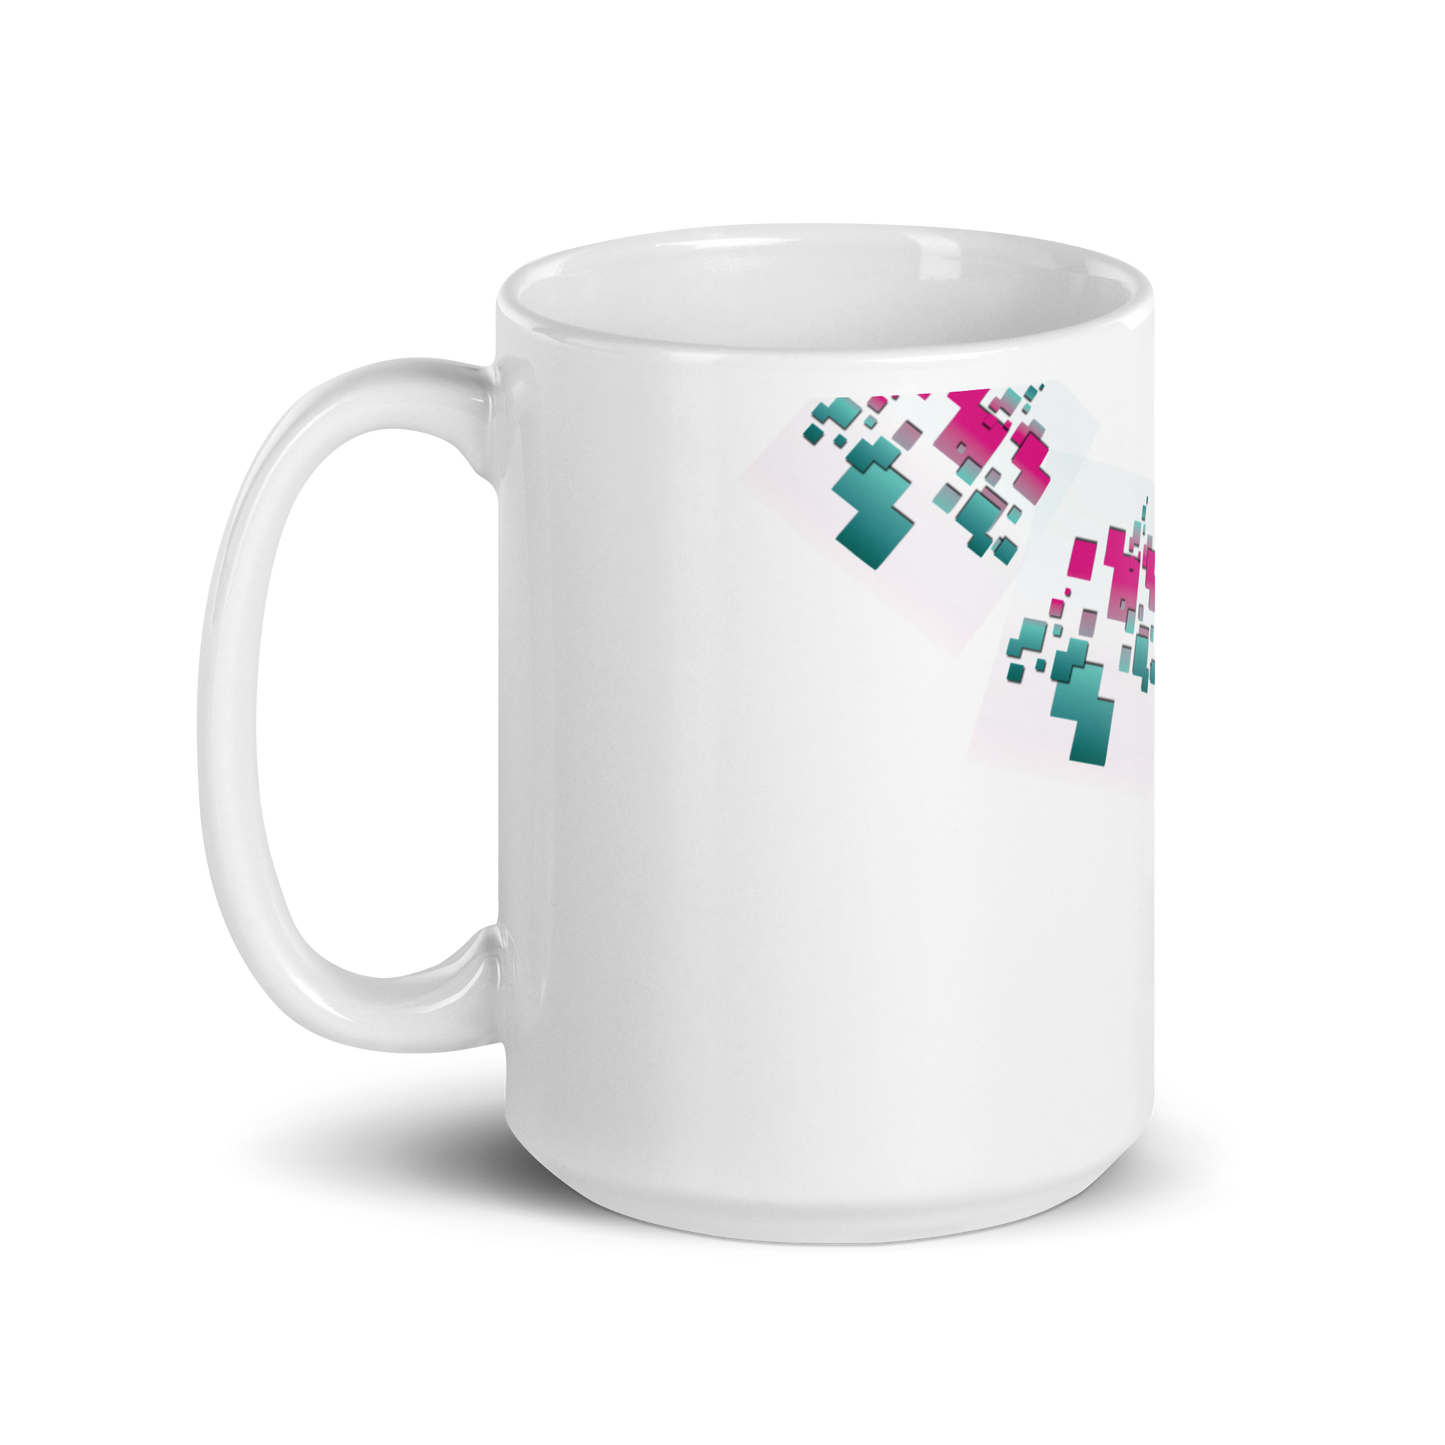 Limited Edition PixelDust PixelHeart White glossy mug